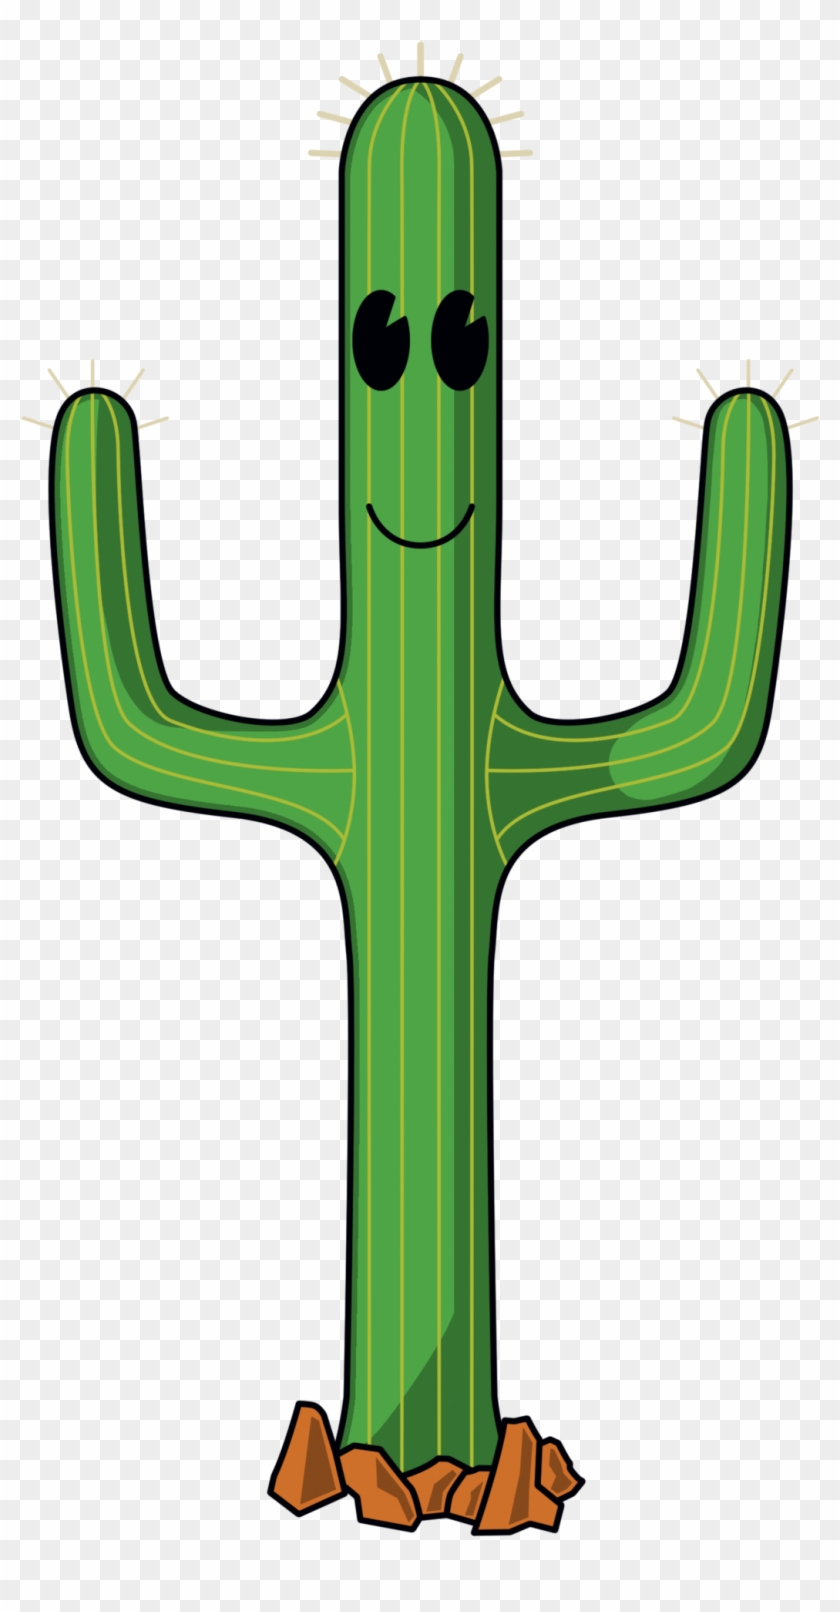 Cactus Clipart Cartoon - Animated Cactus Png #475434